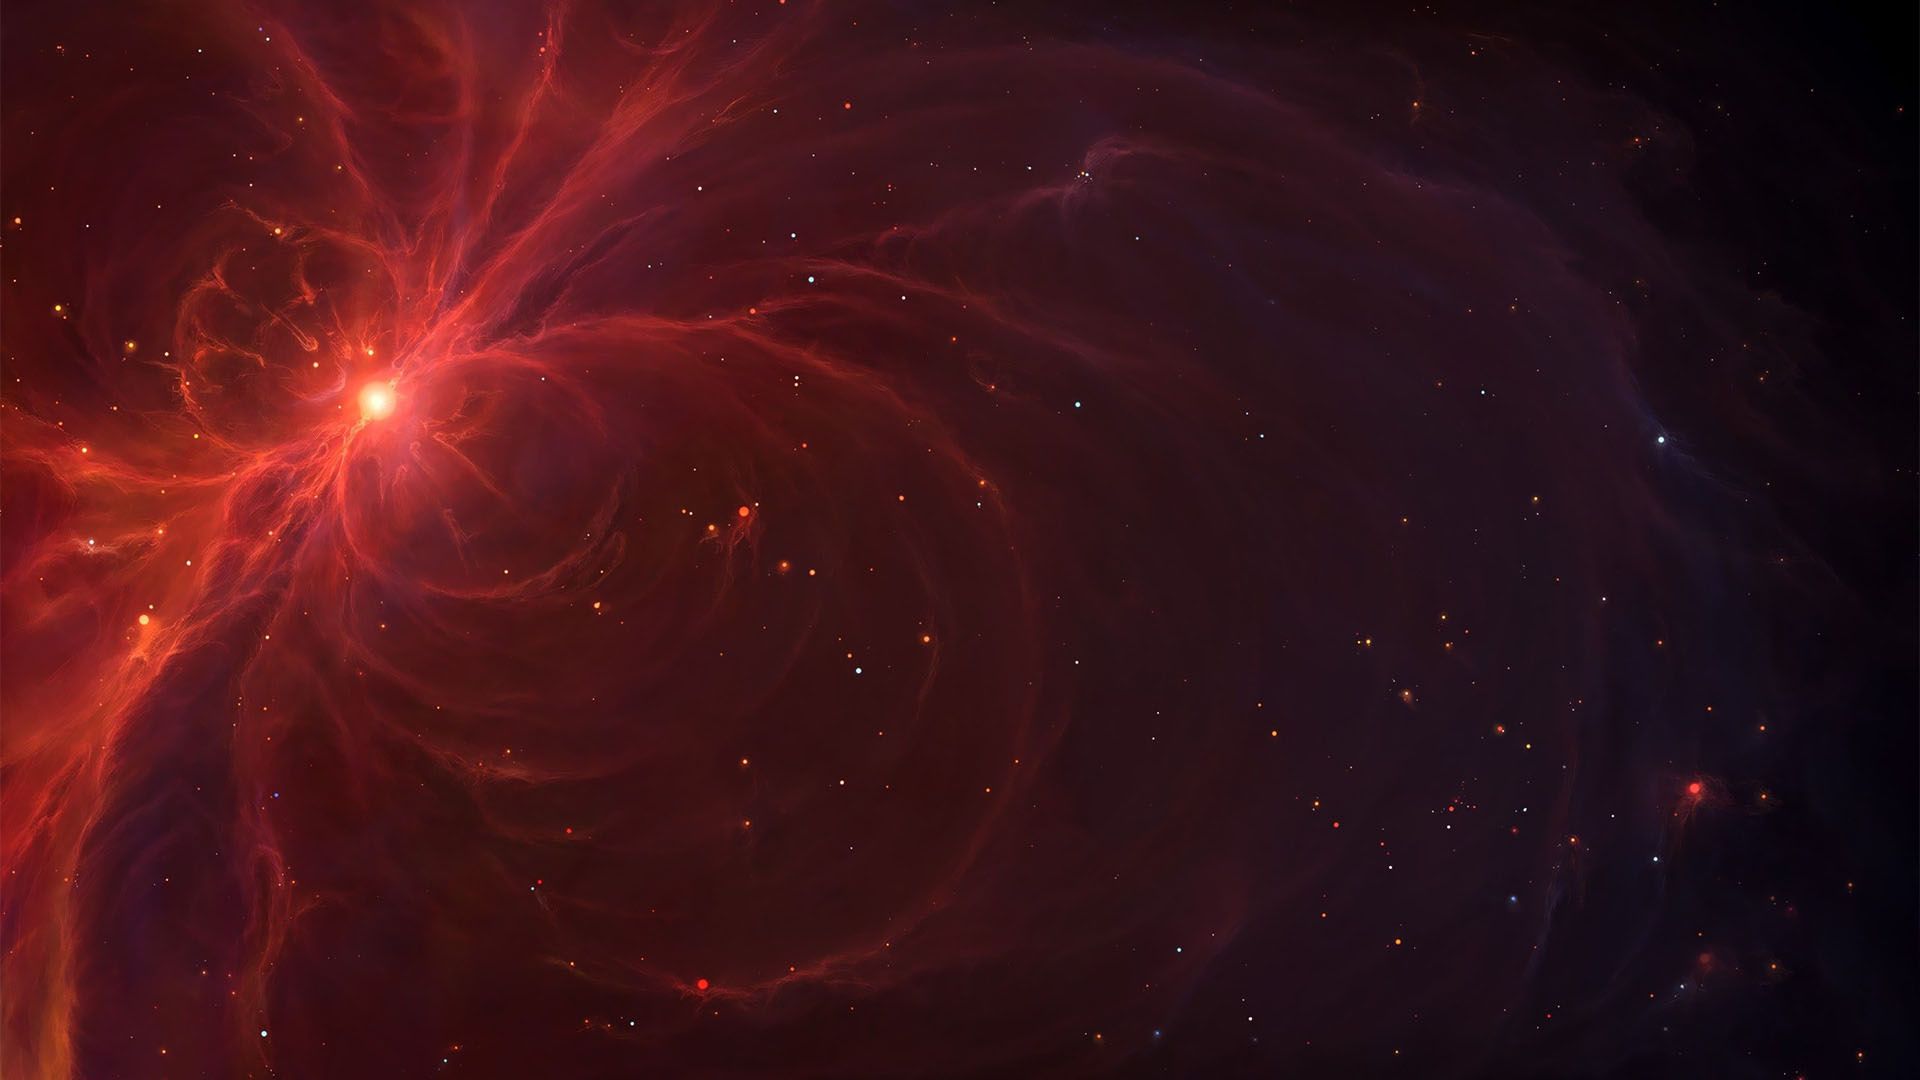 Red Nebula. HD Digital Universe Wallpaper for Mobile and Desktop